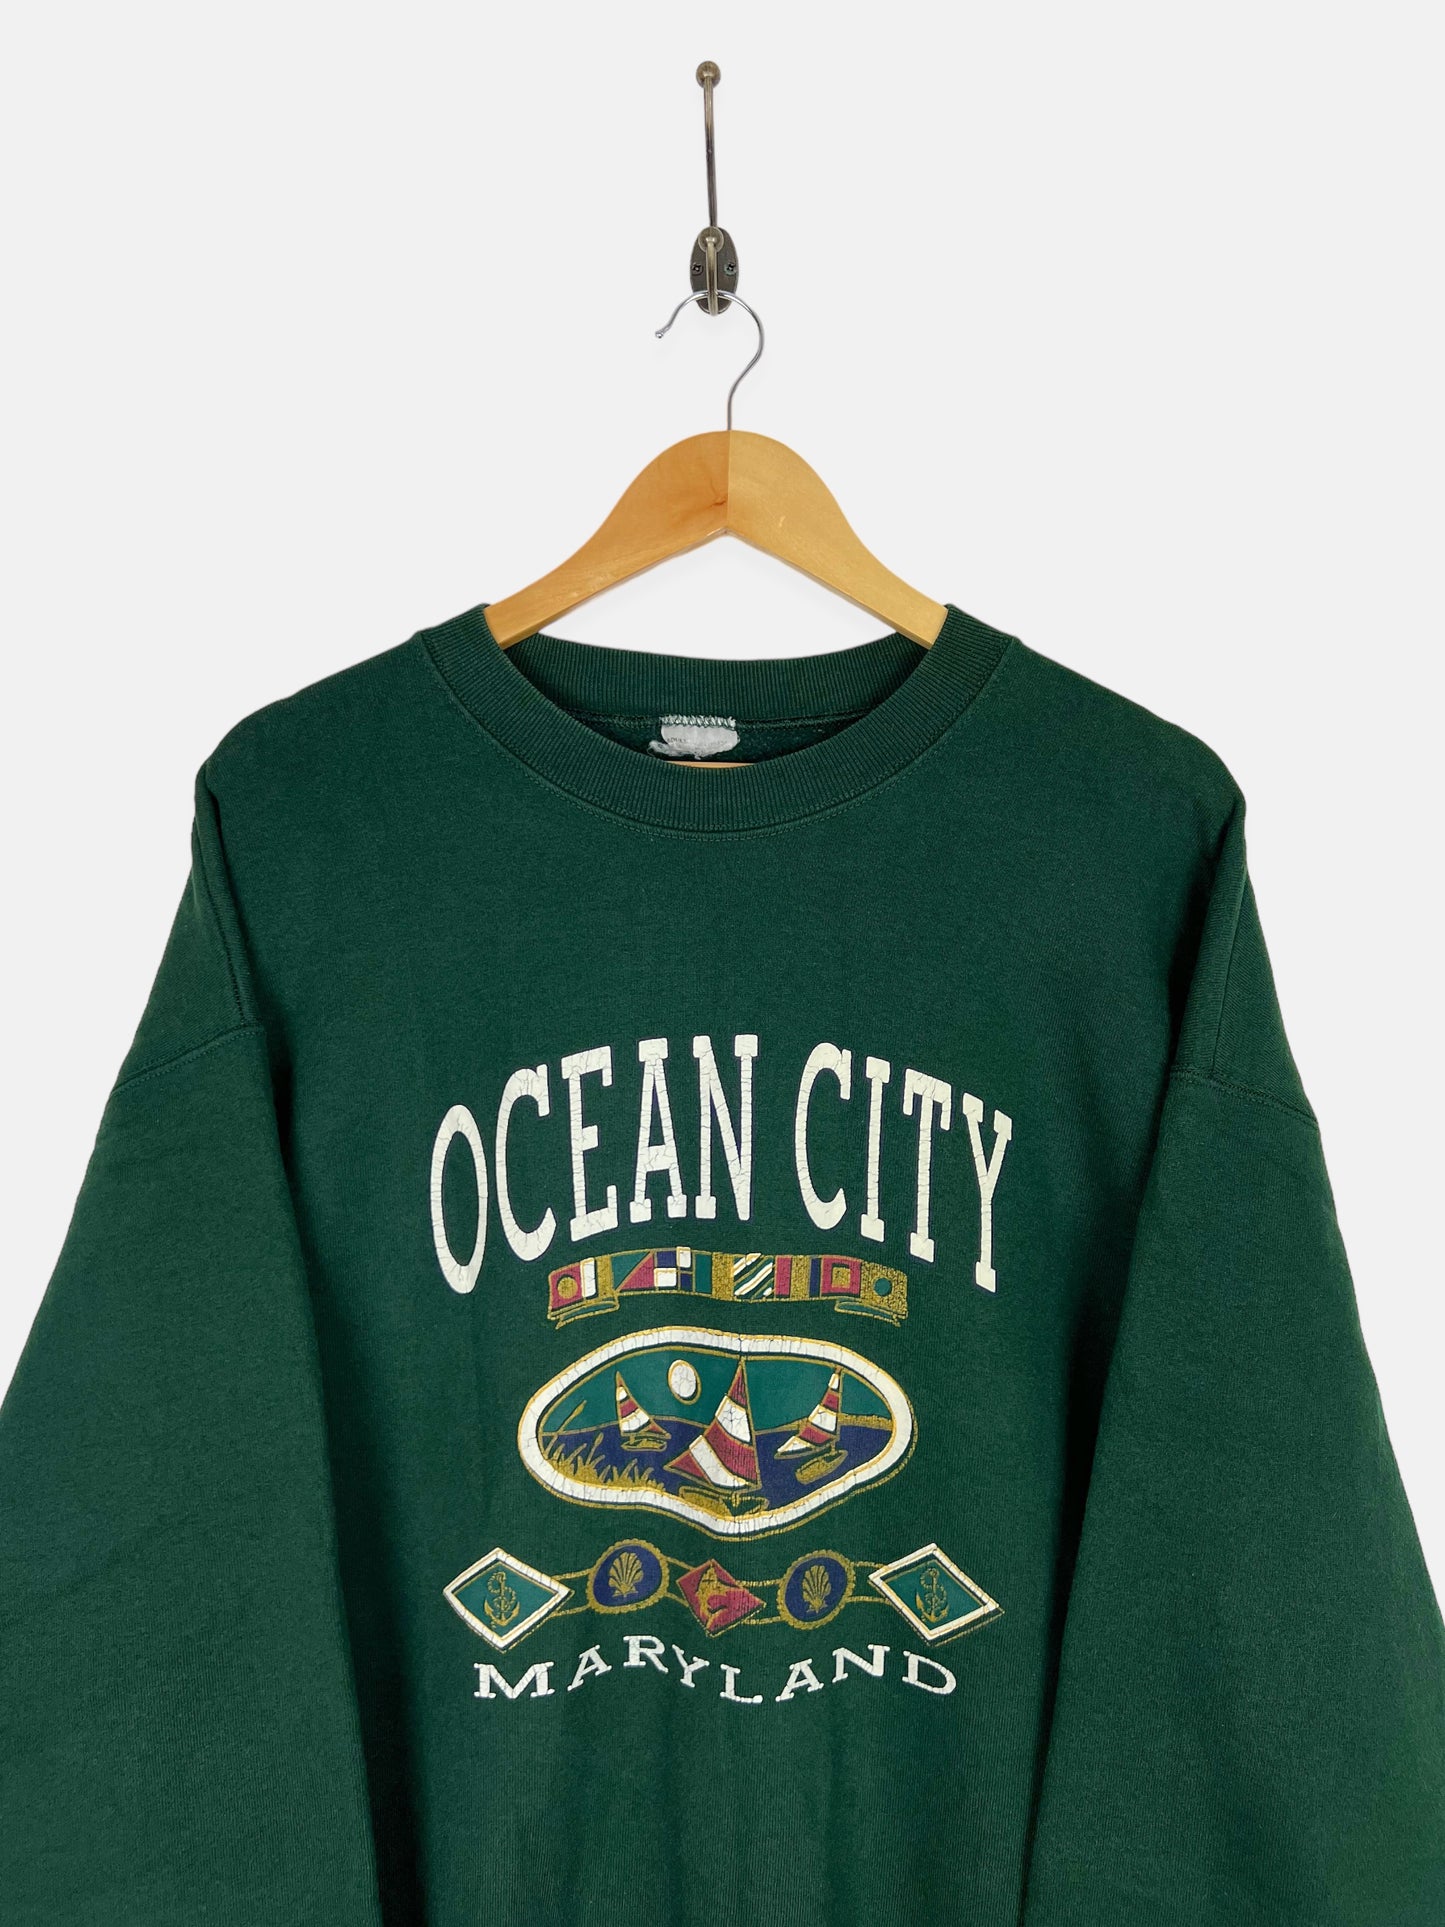 90's Ocean City Maryland Vintage Sweatshirt Size XL